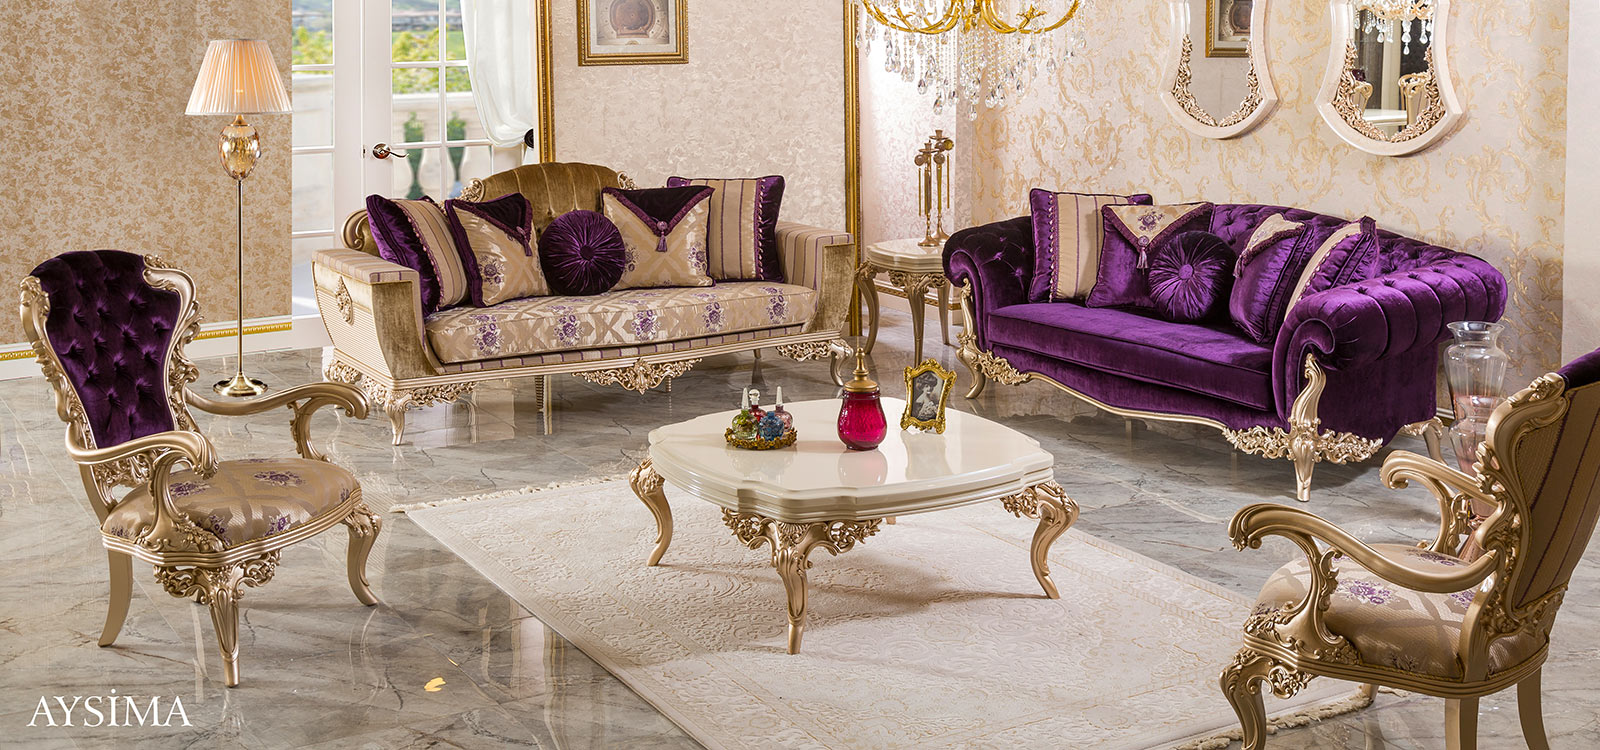 Turkish classic furniture (Aysima)